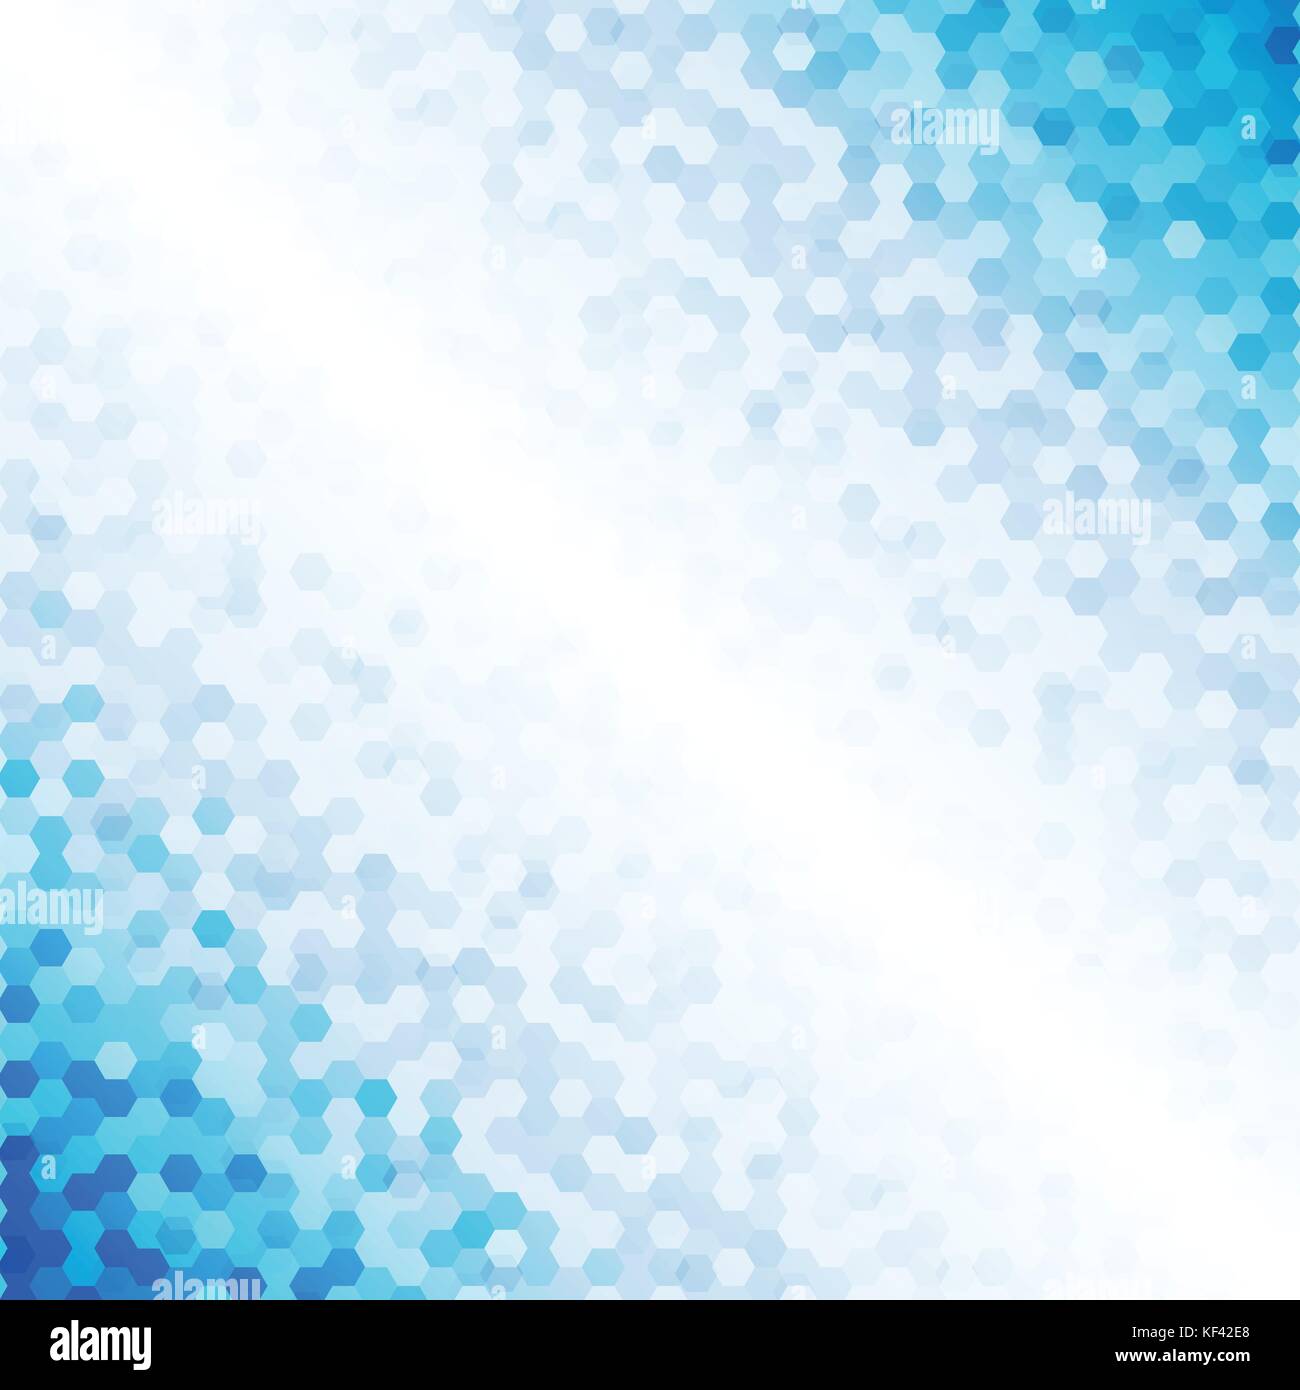 Blau hexagon Muster abstrakt hintergrund Konzept Stock Vektor